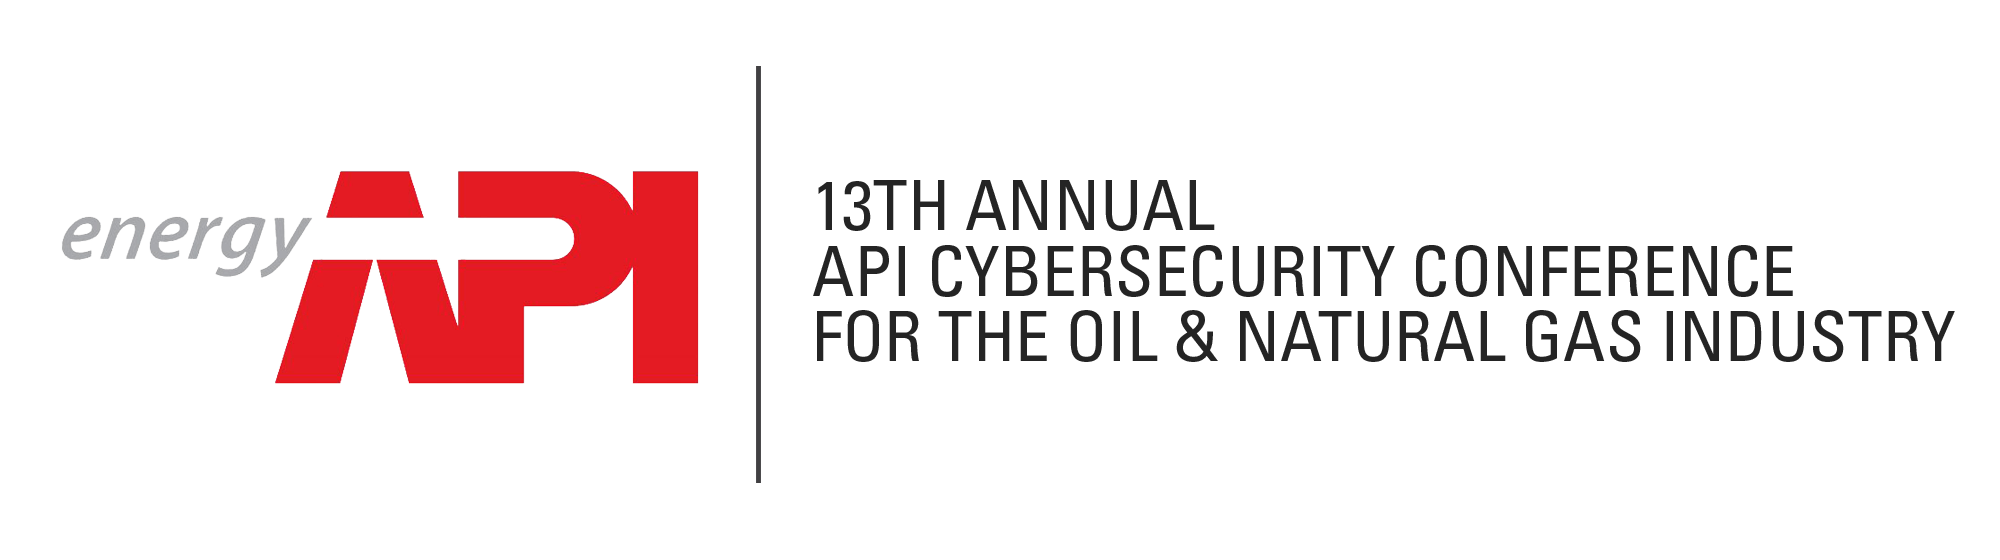 api pipeline conference 2018